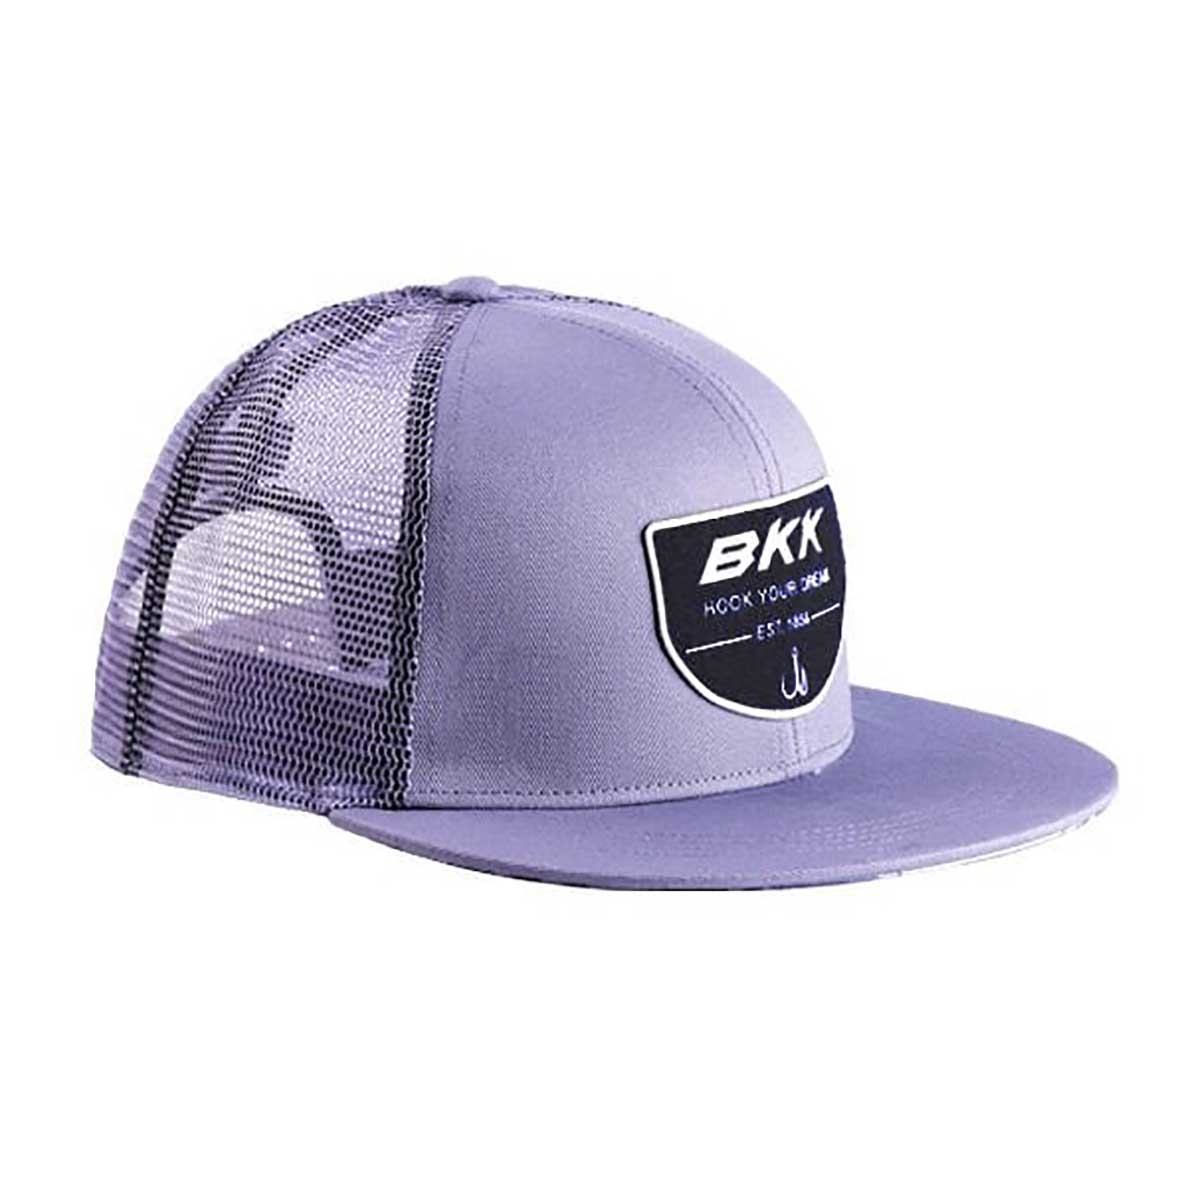 BKK Legacy Snapback Grey Şapka BKK Legacy Snapback Hat, siperli şapka şe